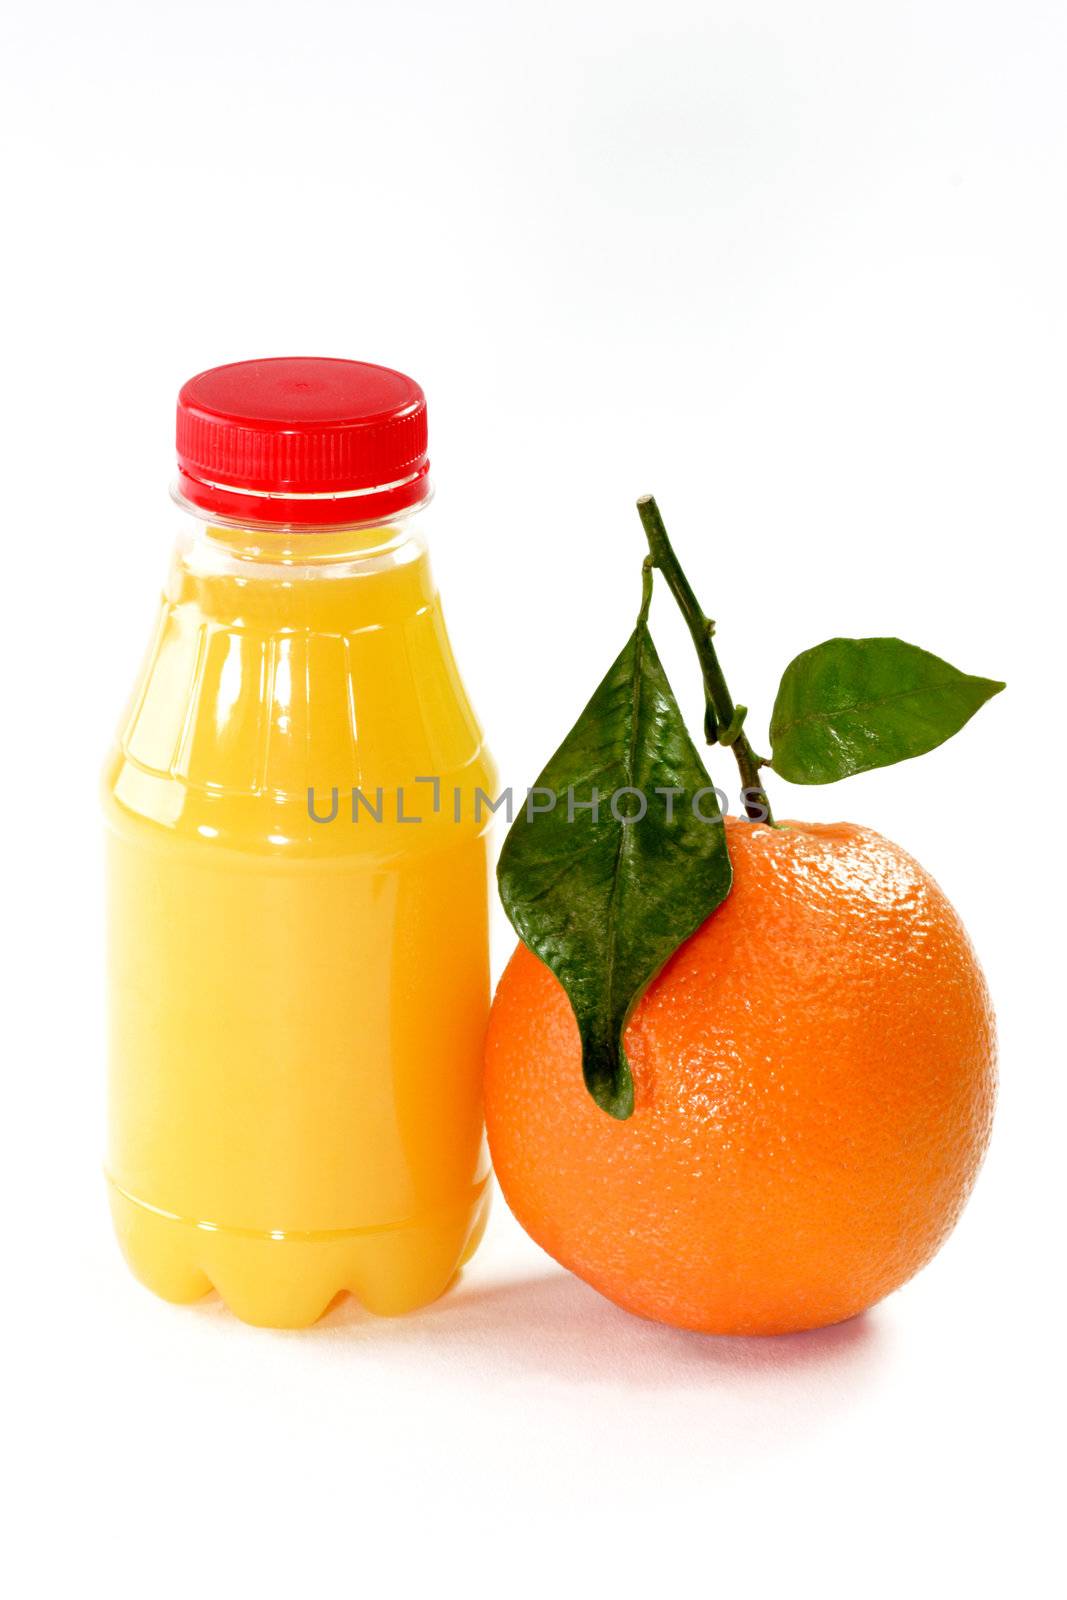 Fresh Orange with Orange Juice in the bottle on bright background. 